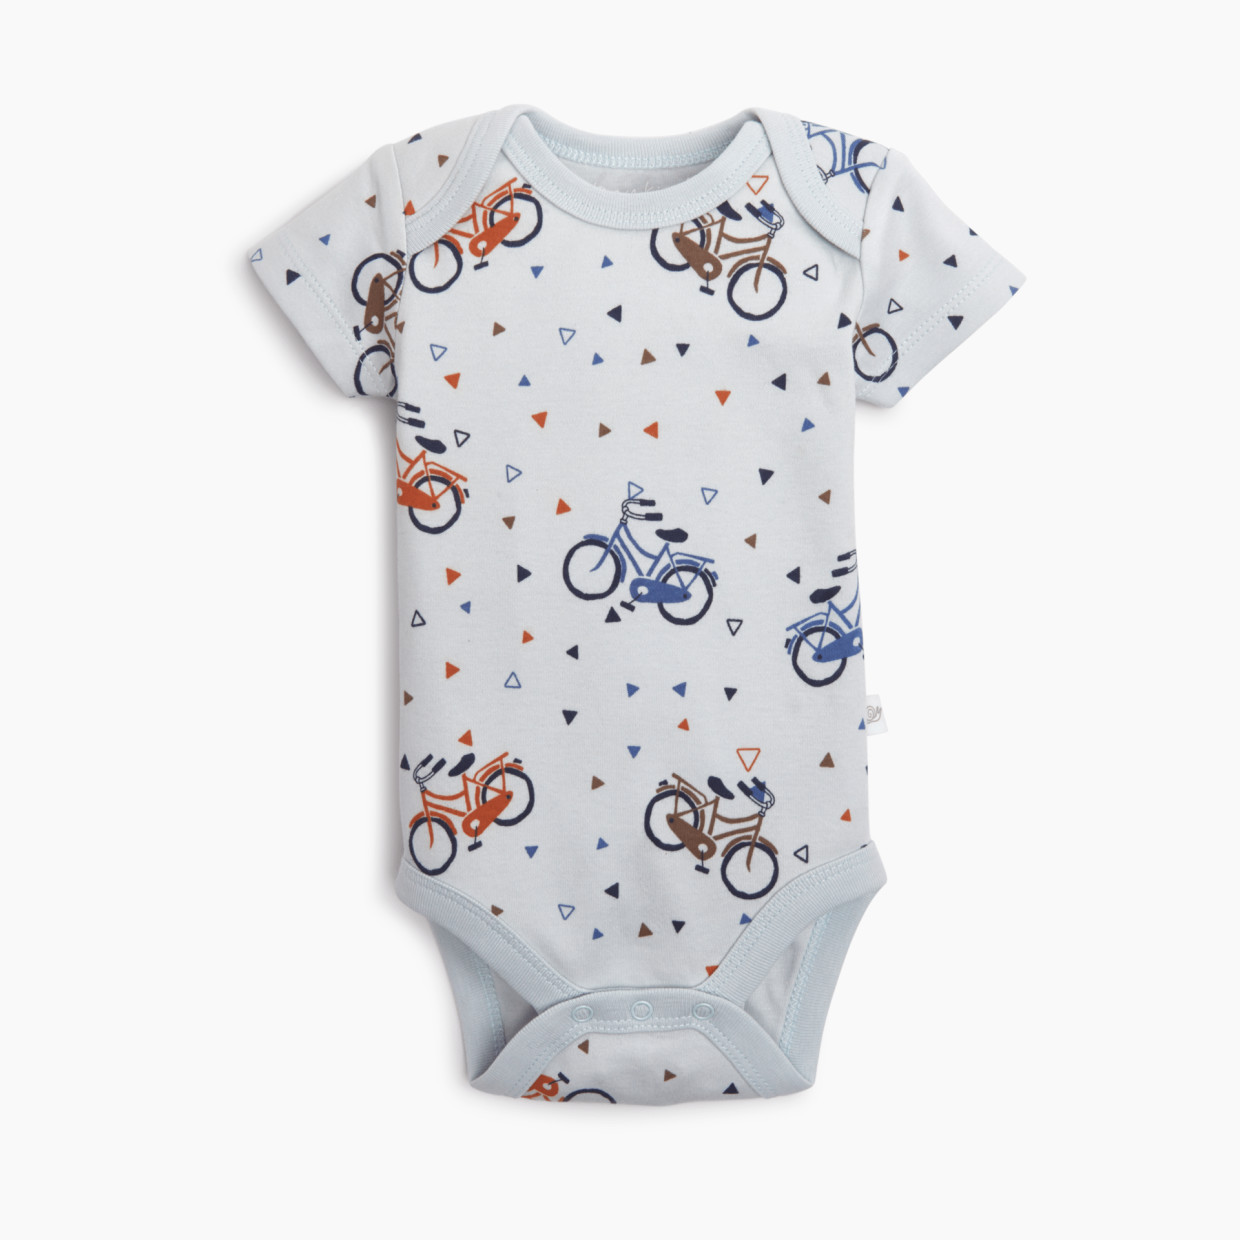 Tiny Kind Printed Short Sleeve Organic Cotton Bodysuit - Bicycle, 0-3 M.